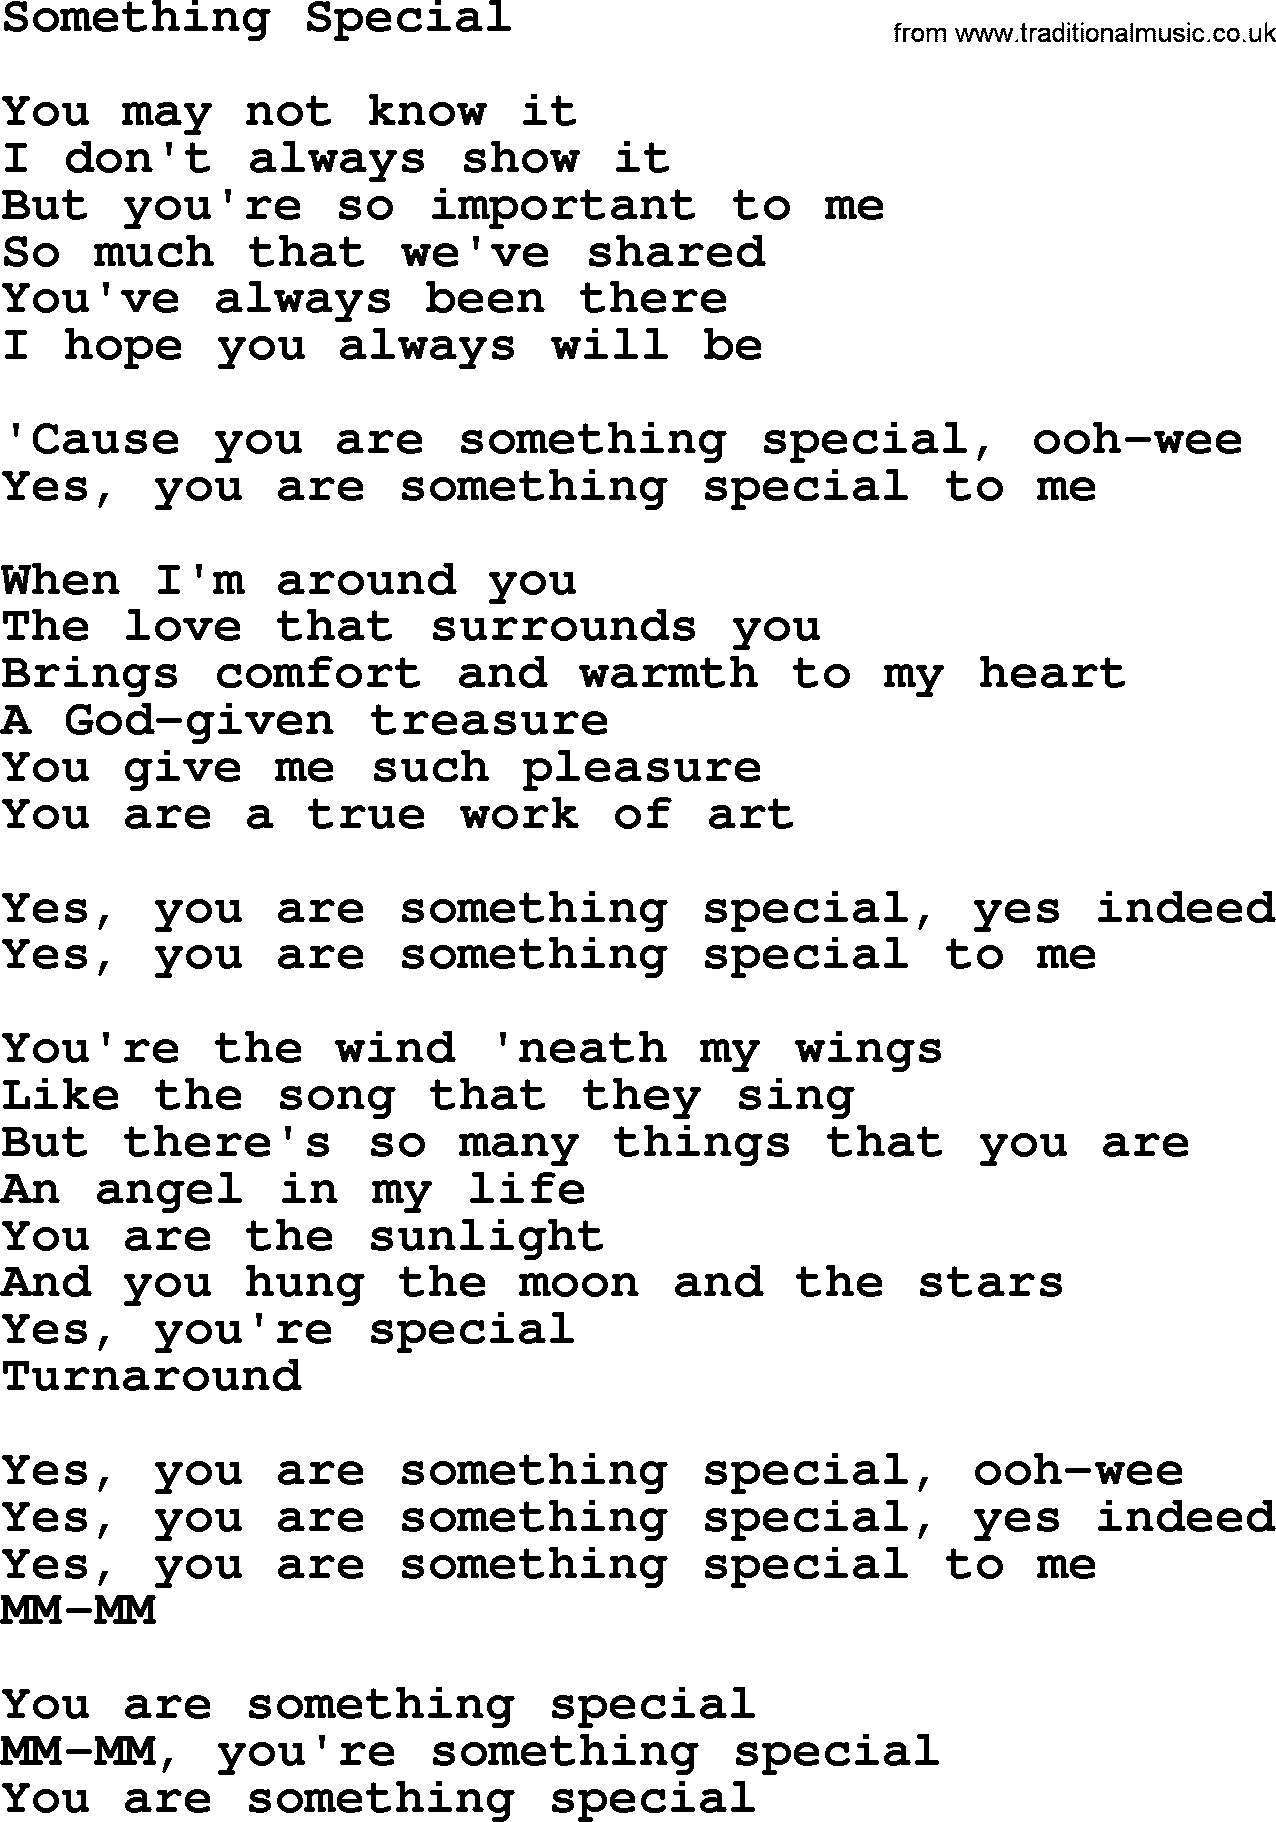 Dolly Parton song Something Special.txt lyrics